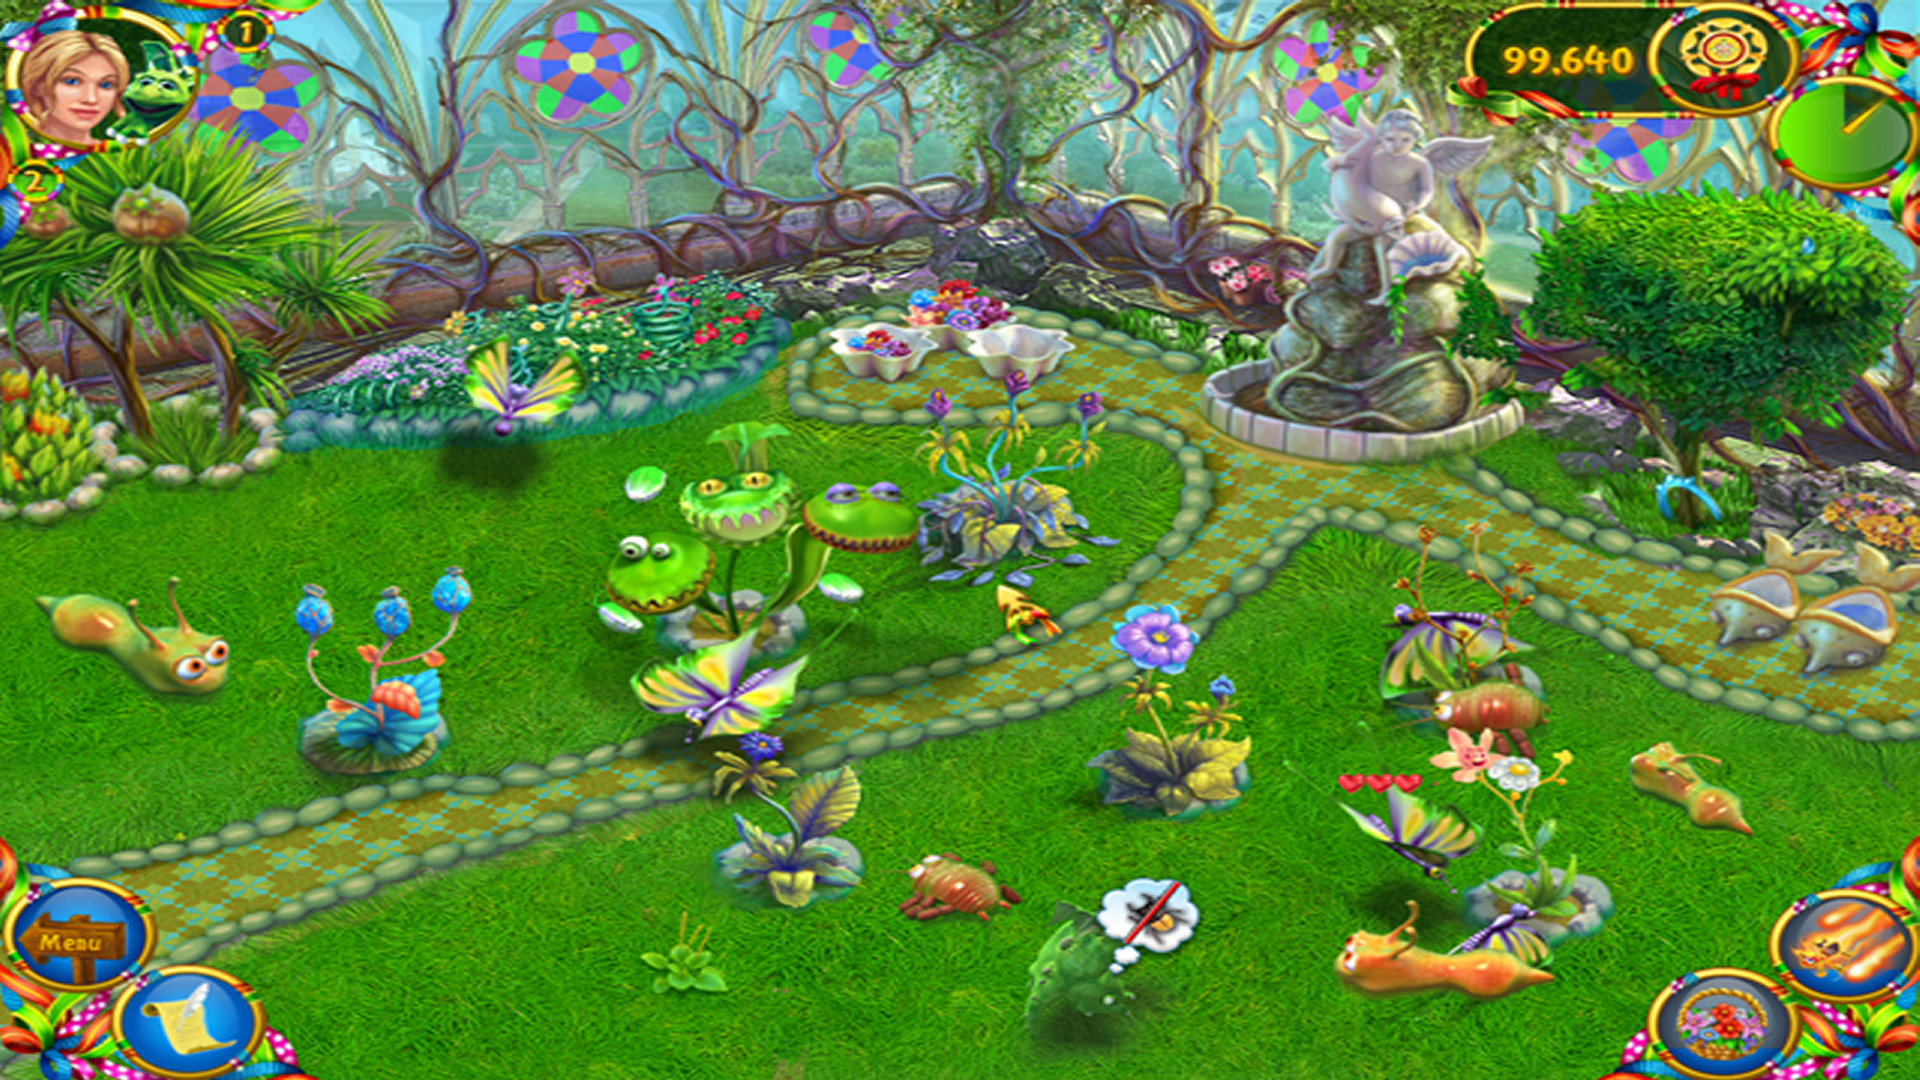 free download game magic farm 2 fairy lands full version